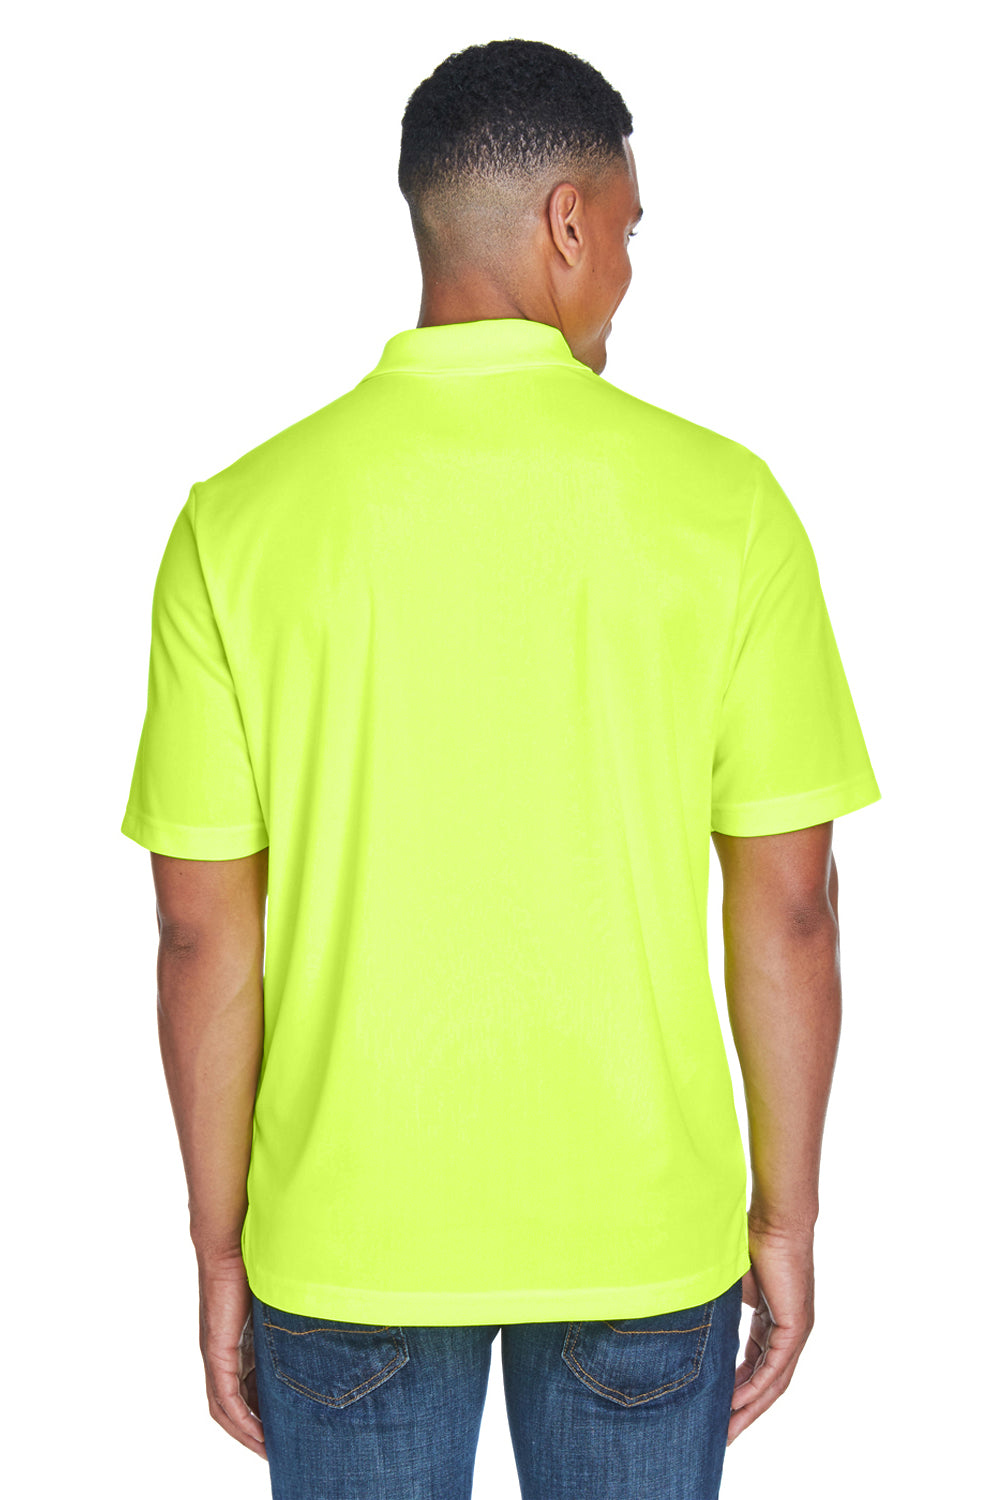 Core 365 88181P Mens Origin Performance Moisture Wicking Short Sleeve Polo Shirt w/ Pocket Safety Yellow Back